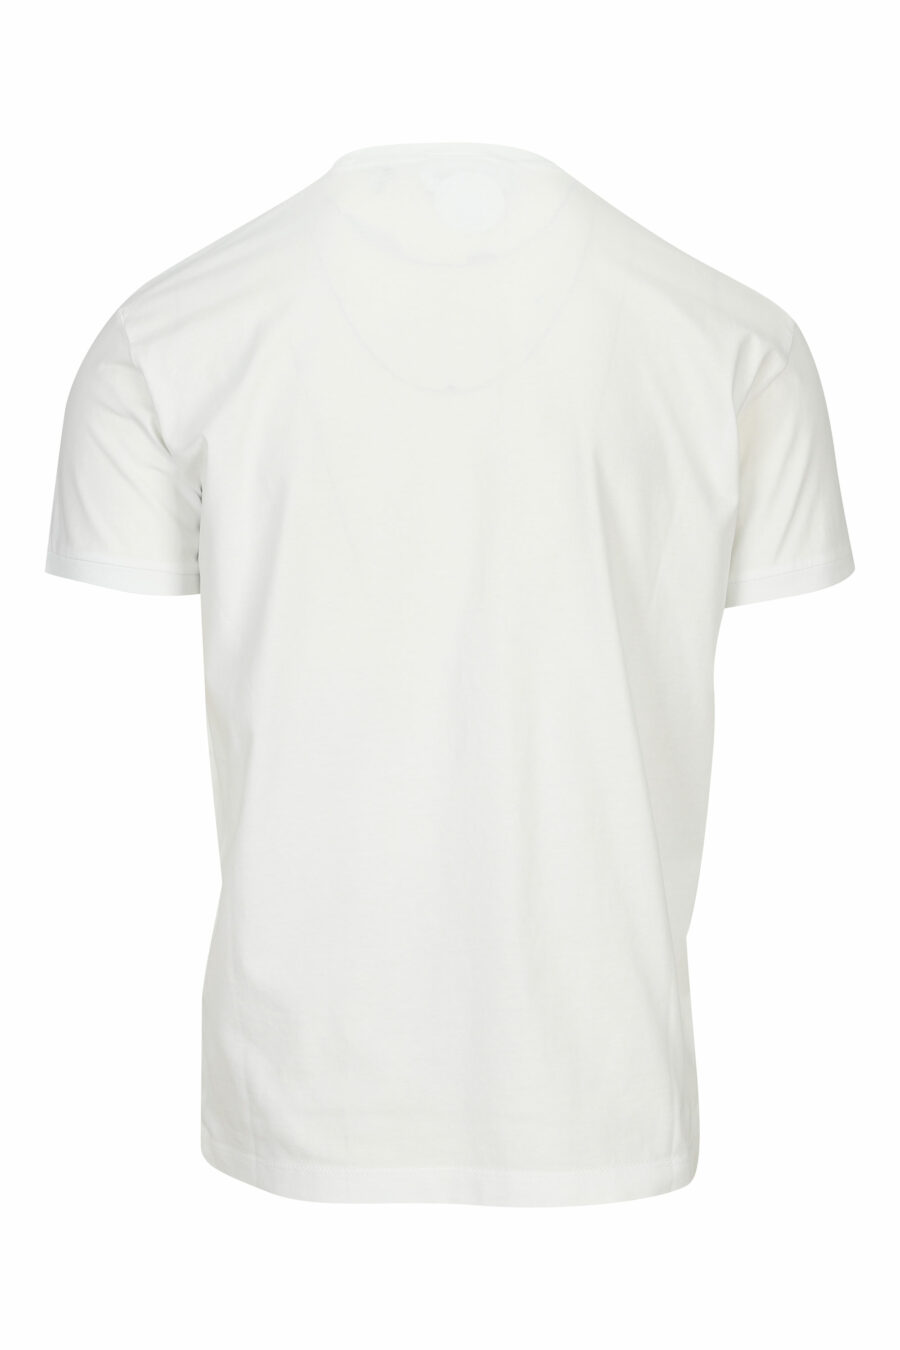 White T-shirt with black graffiti maxilogo - 8054148572037 1